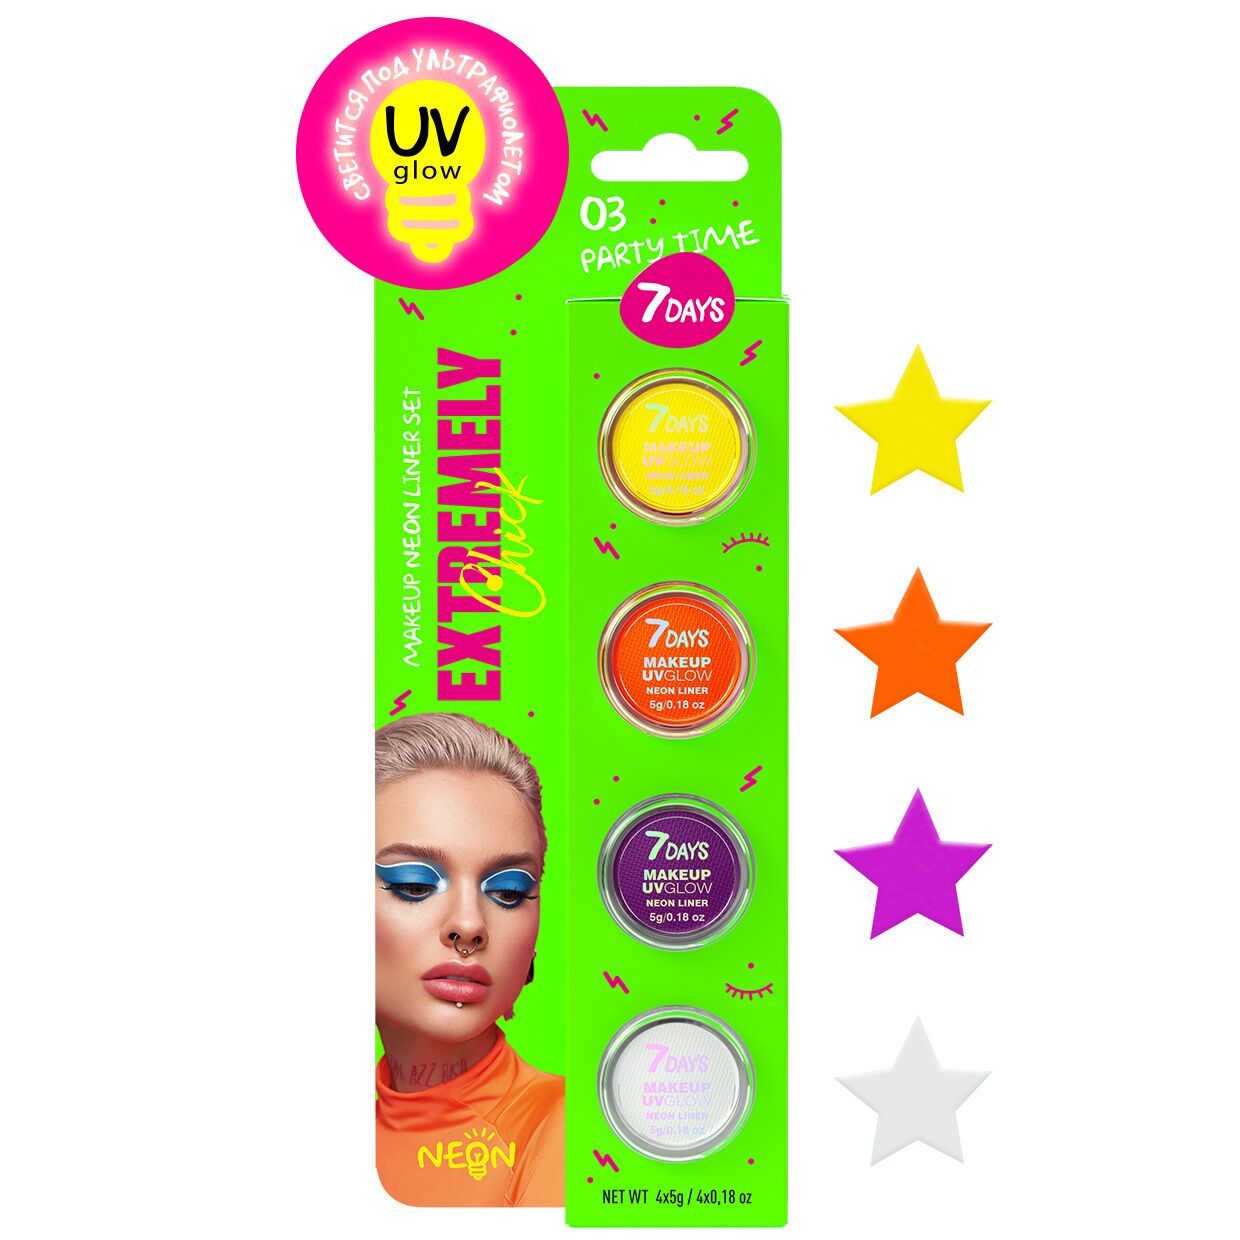 Набор графических лайнеров для макияжа 7 Days Extremely Chick UVglow Neon, 03 Party time